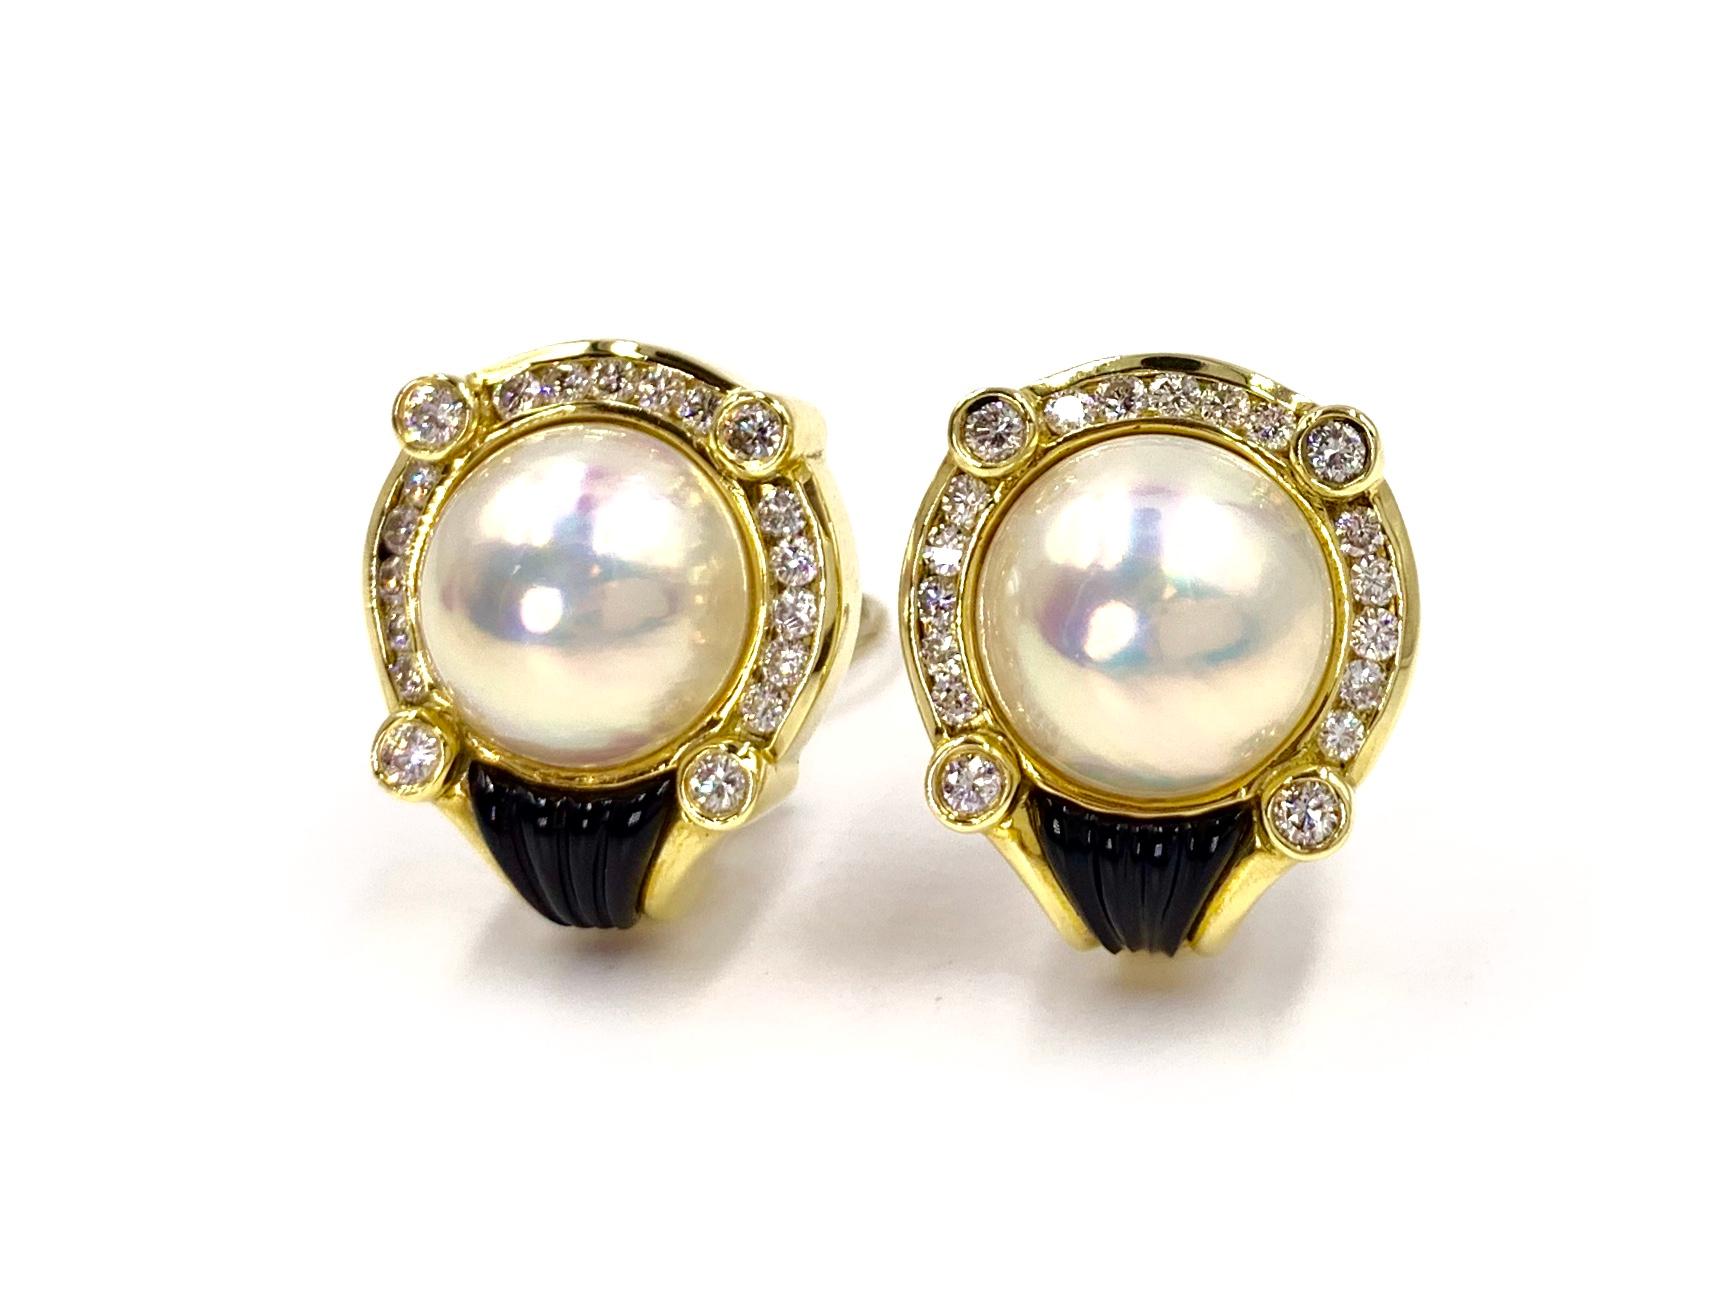 Contemporary La Triomphe 18 Karat Diamond, Pearl and Onyx Button Earrings